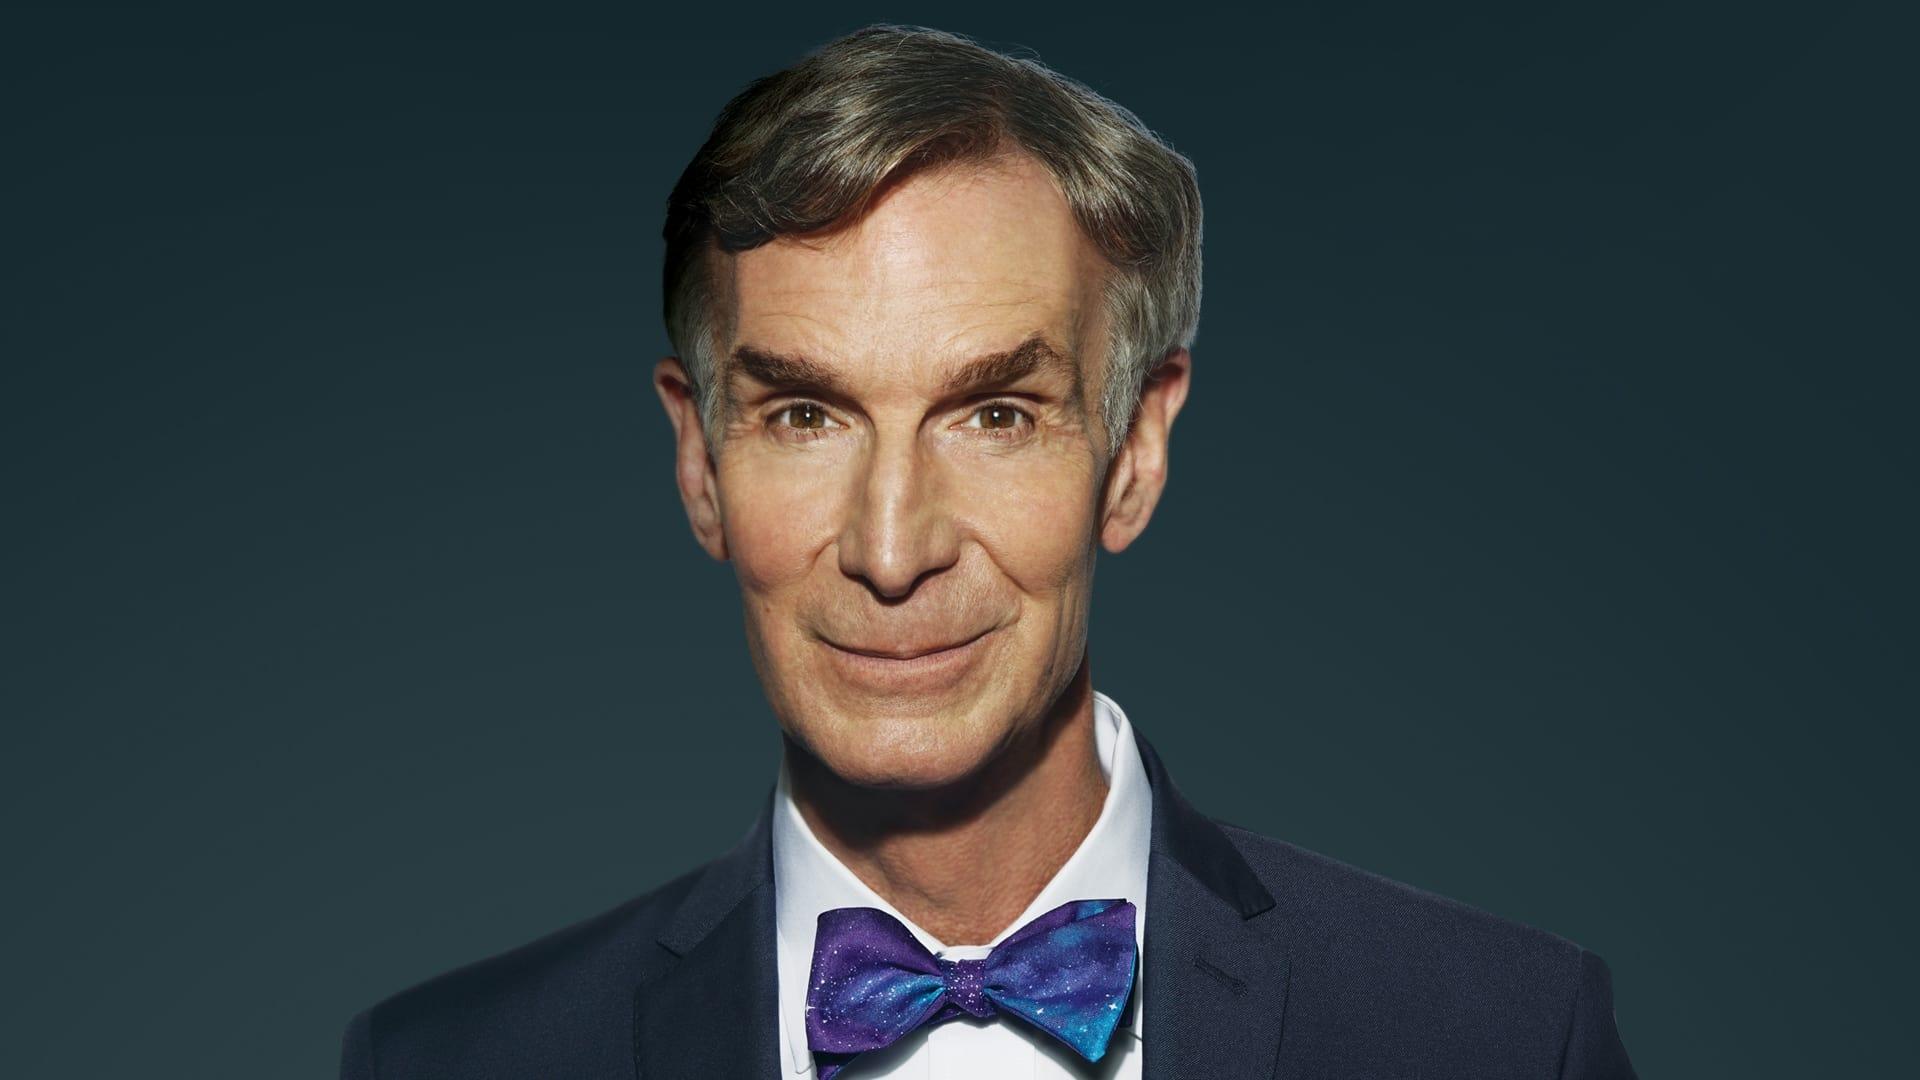 Bill Nye: Science Guy backdrop